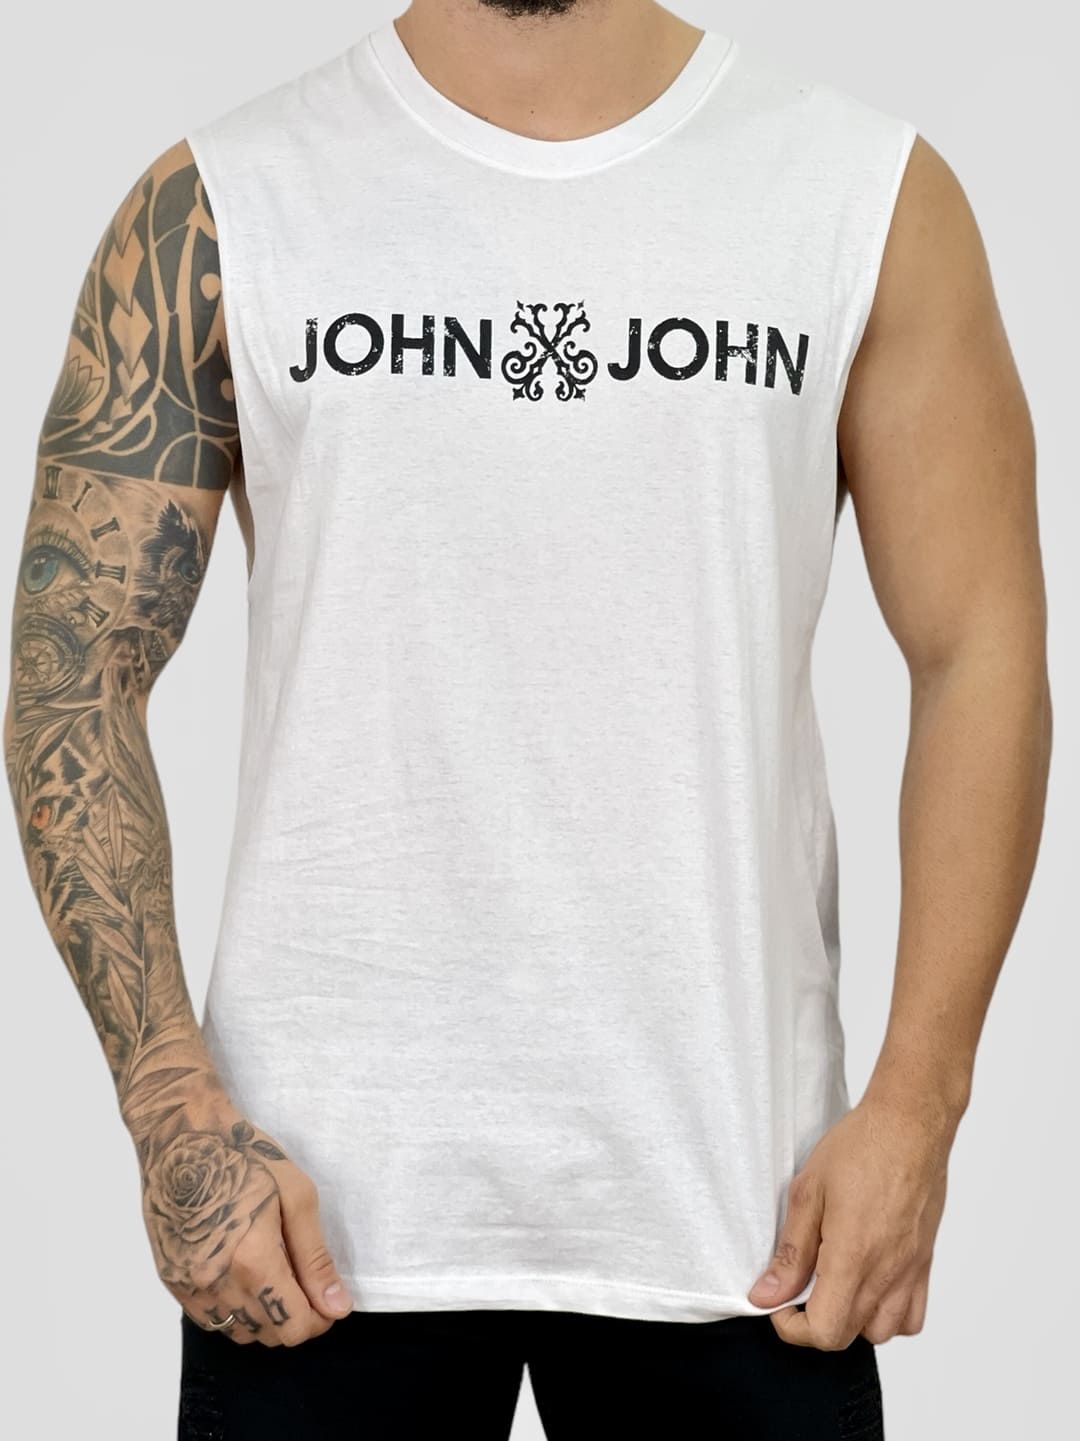 John John - Imperium Store Loja de roupas multimarcas masculina, camiseta john  john masculina - marazulseguros.com.br